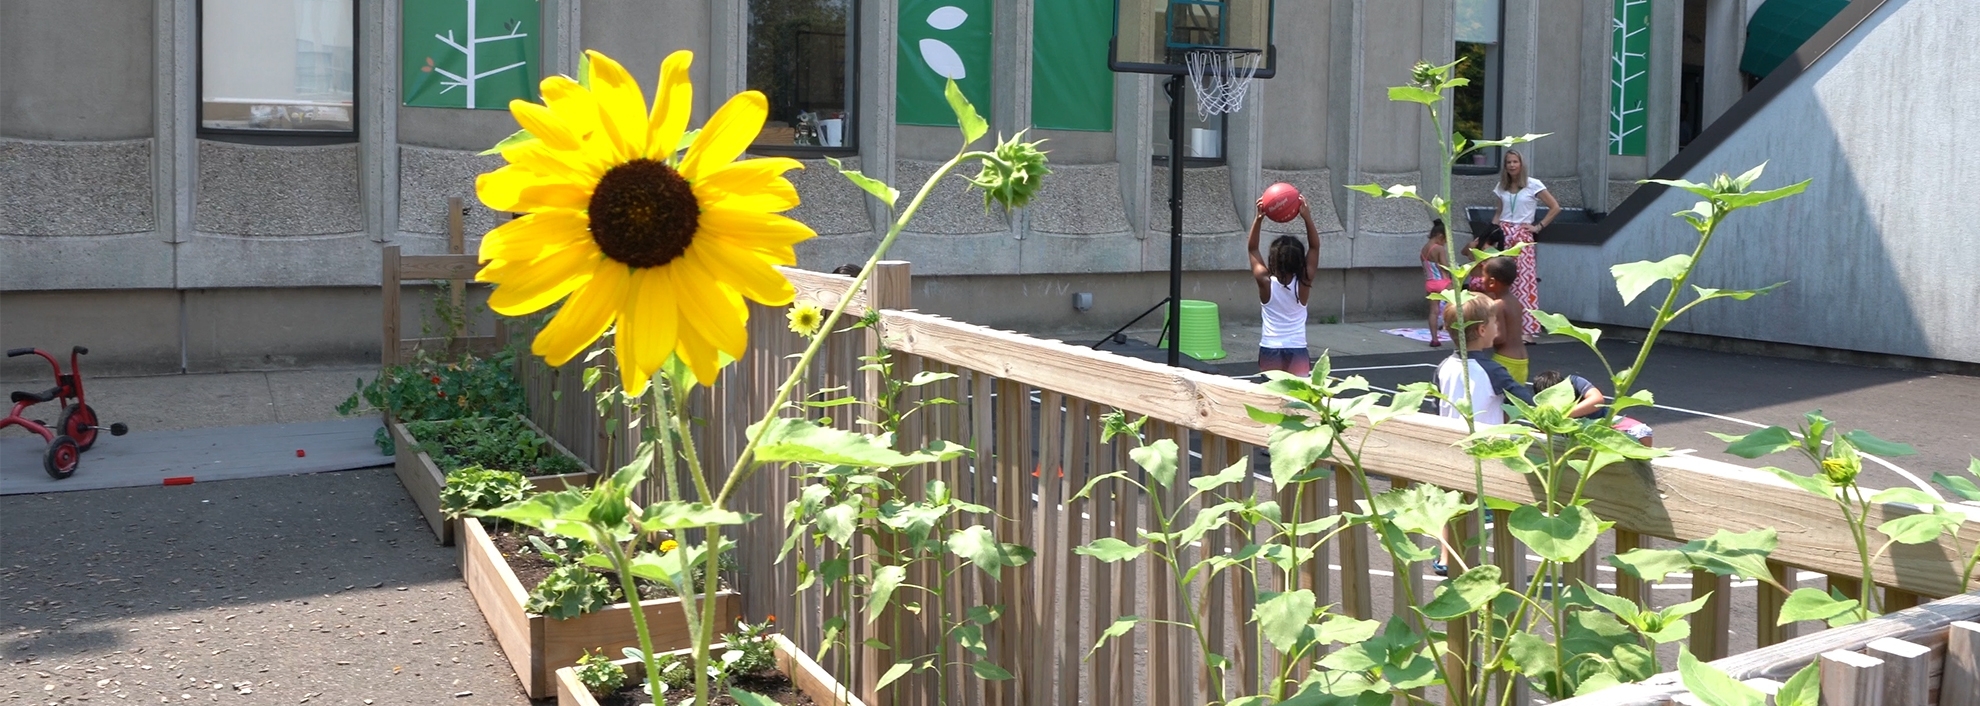 Sunflower at Rising Hope School